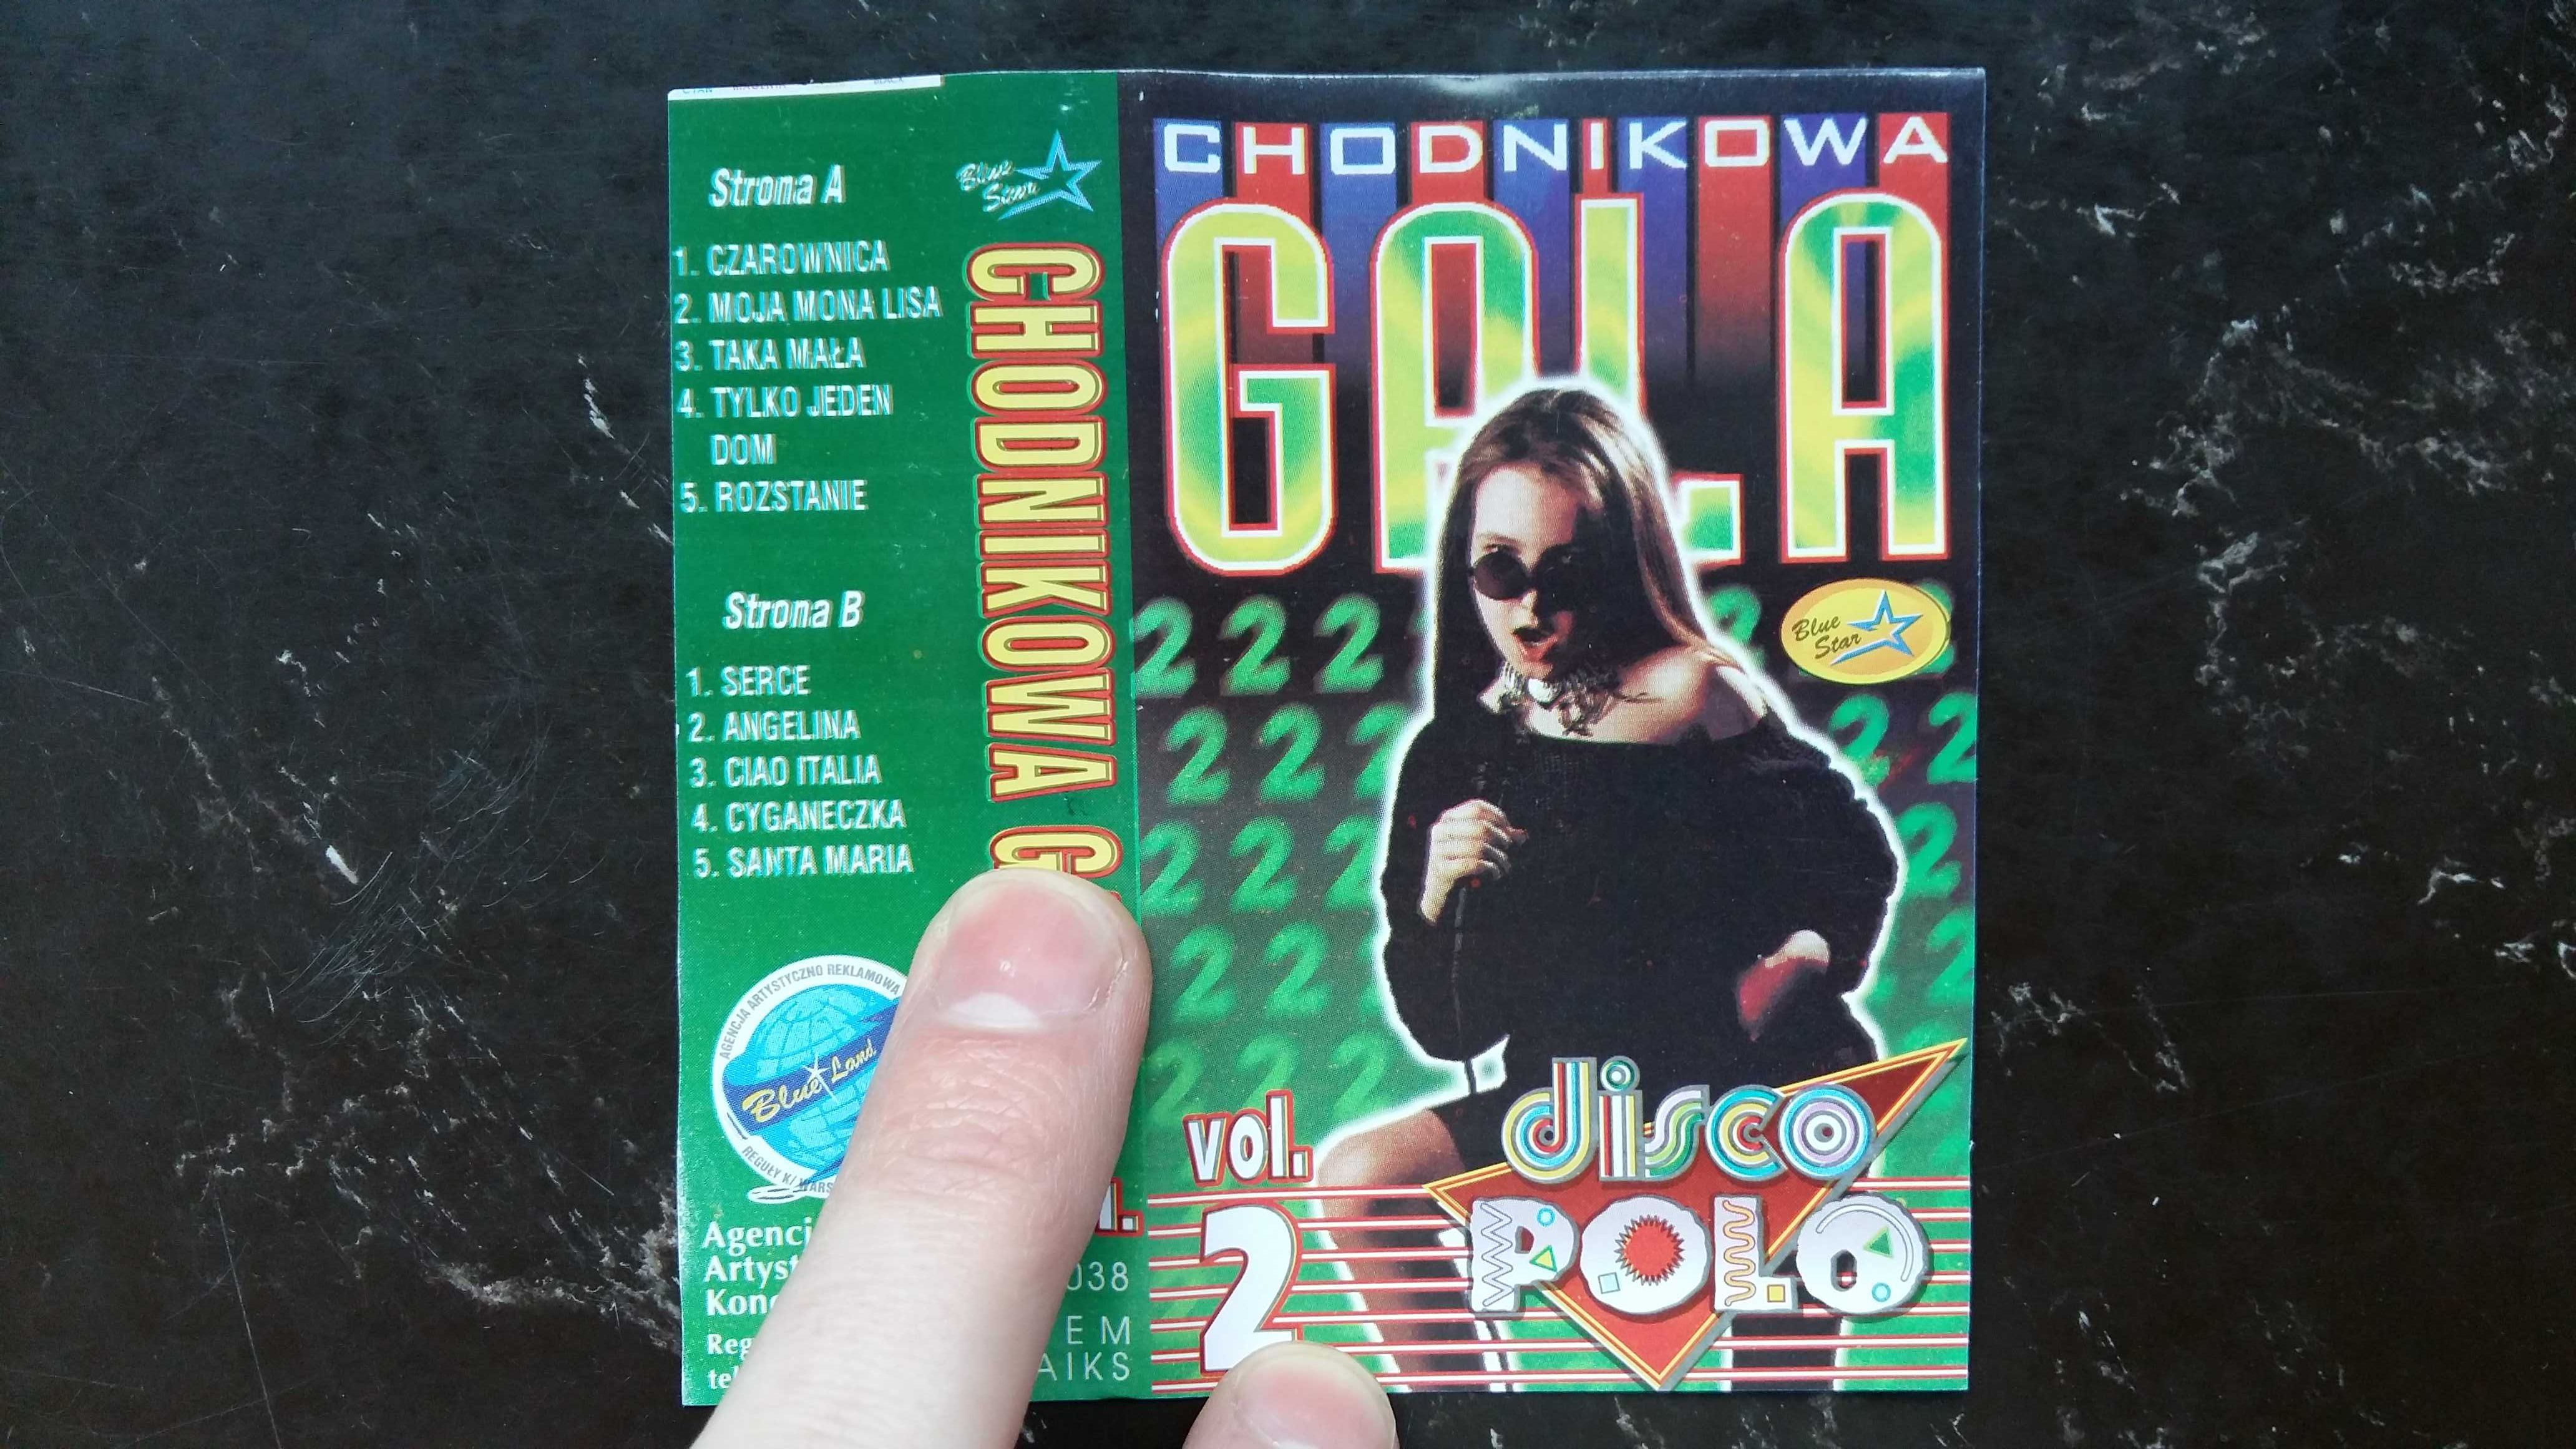 Kaseta magnetofonowa Chodnikowa gala Disco Polo Vol.2 ,Wyd. Blue Star